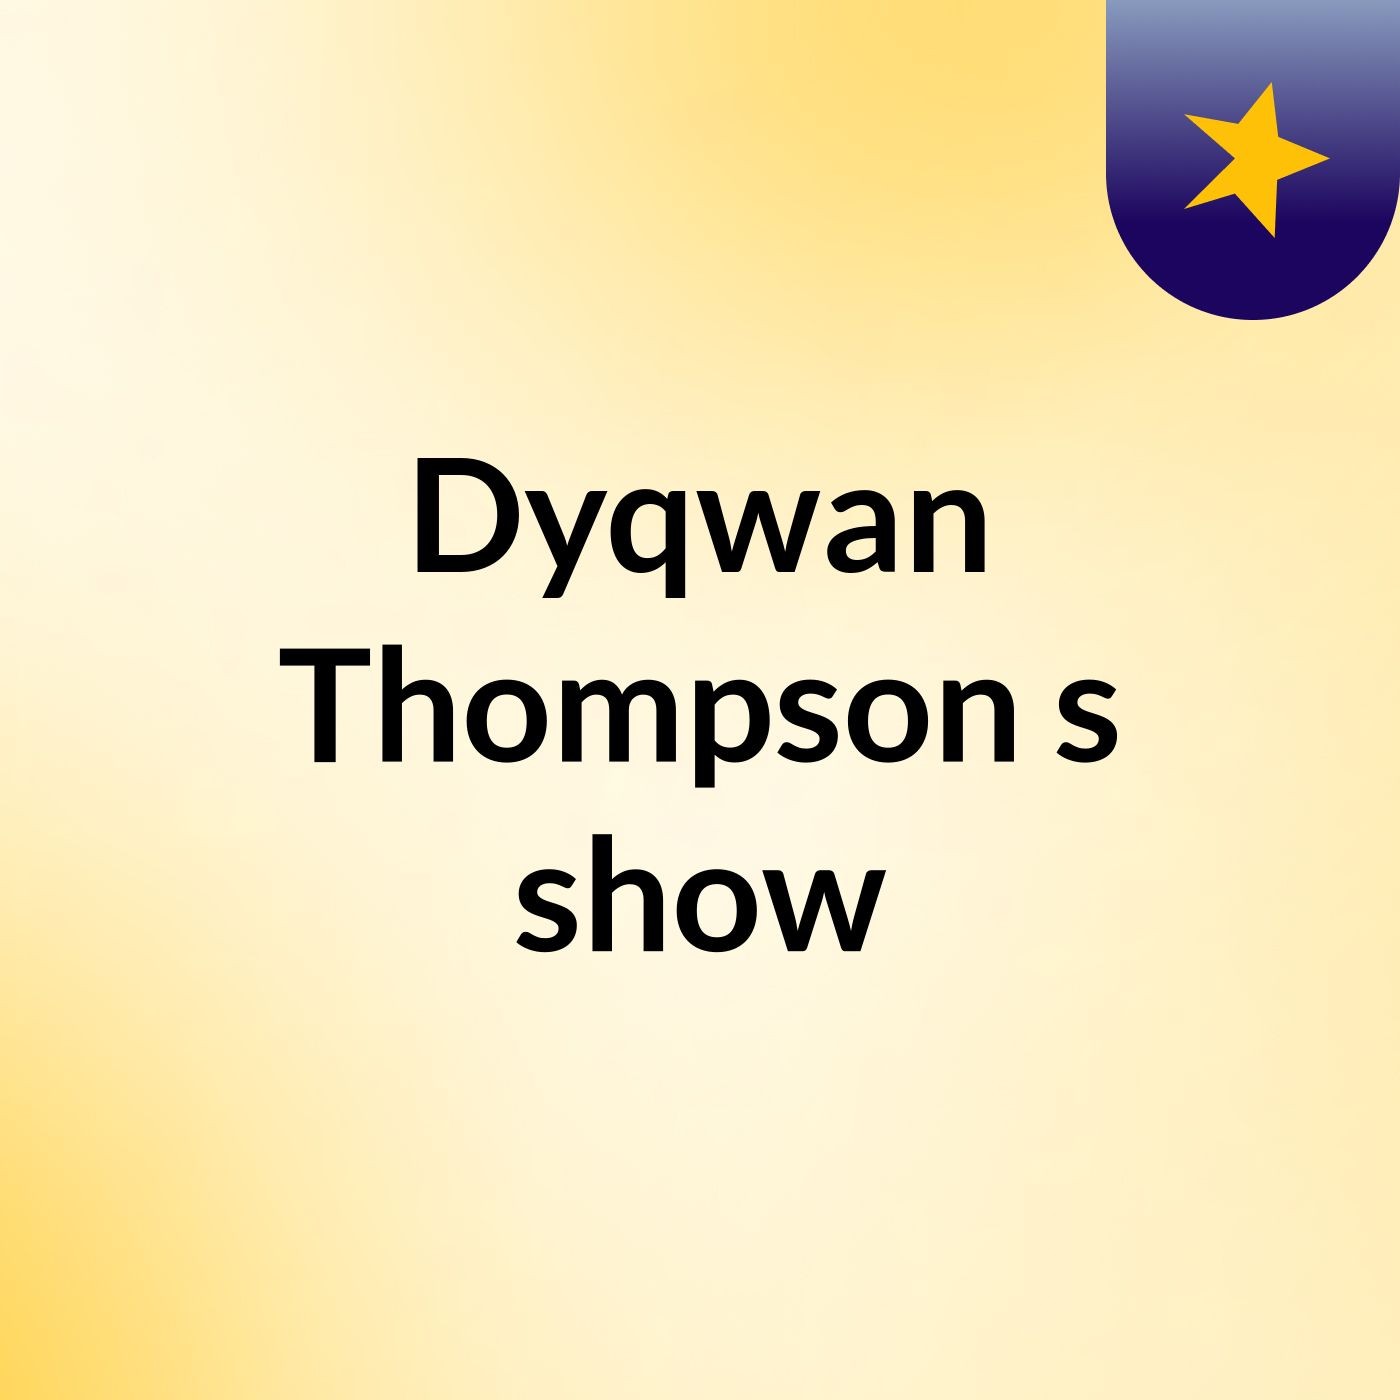 Dyqwan Thompson's show